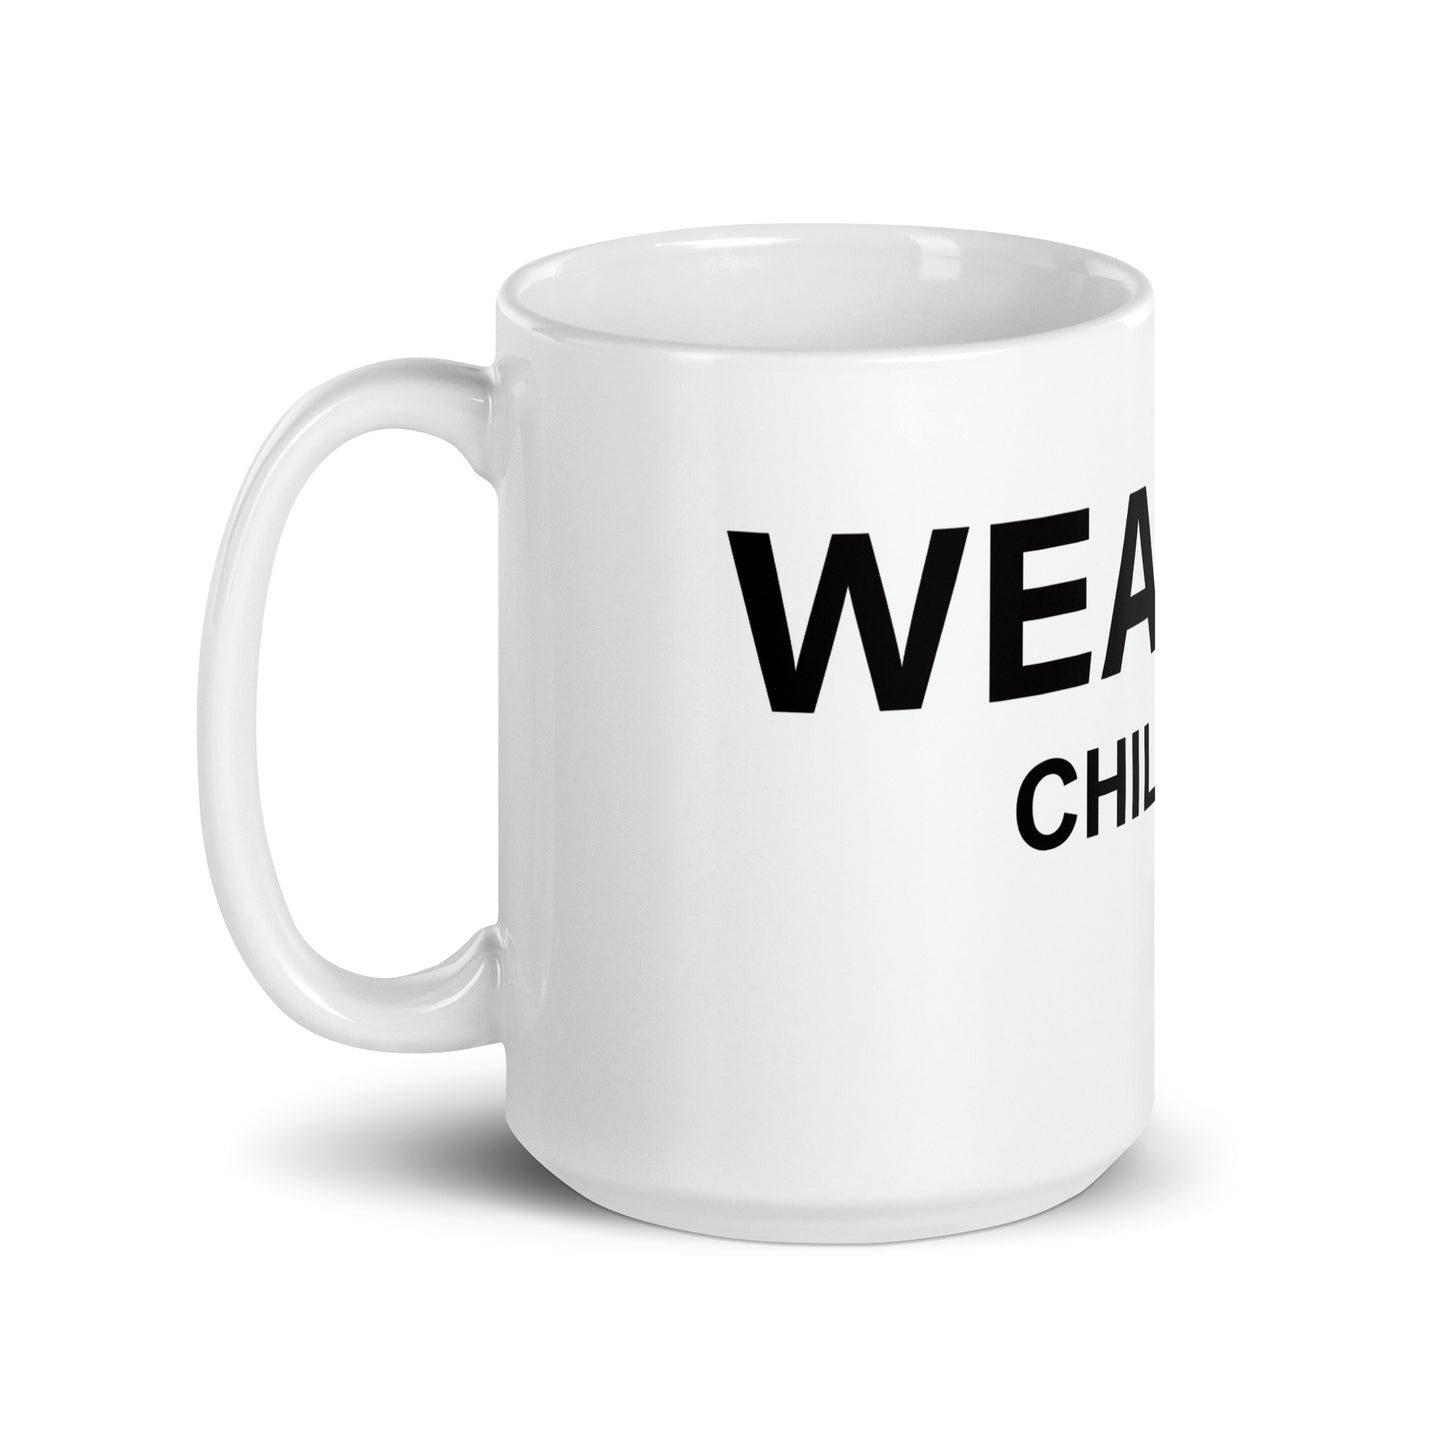 Wealthy mug